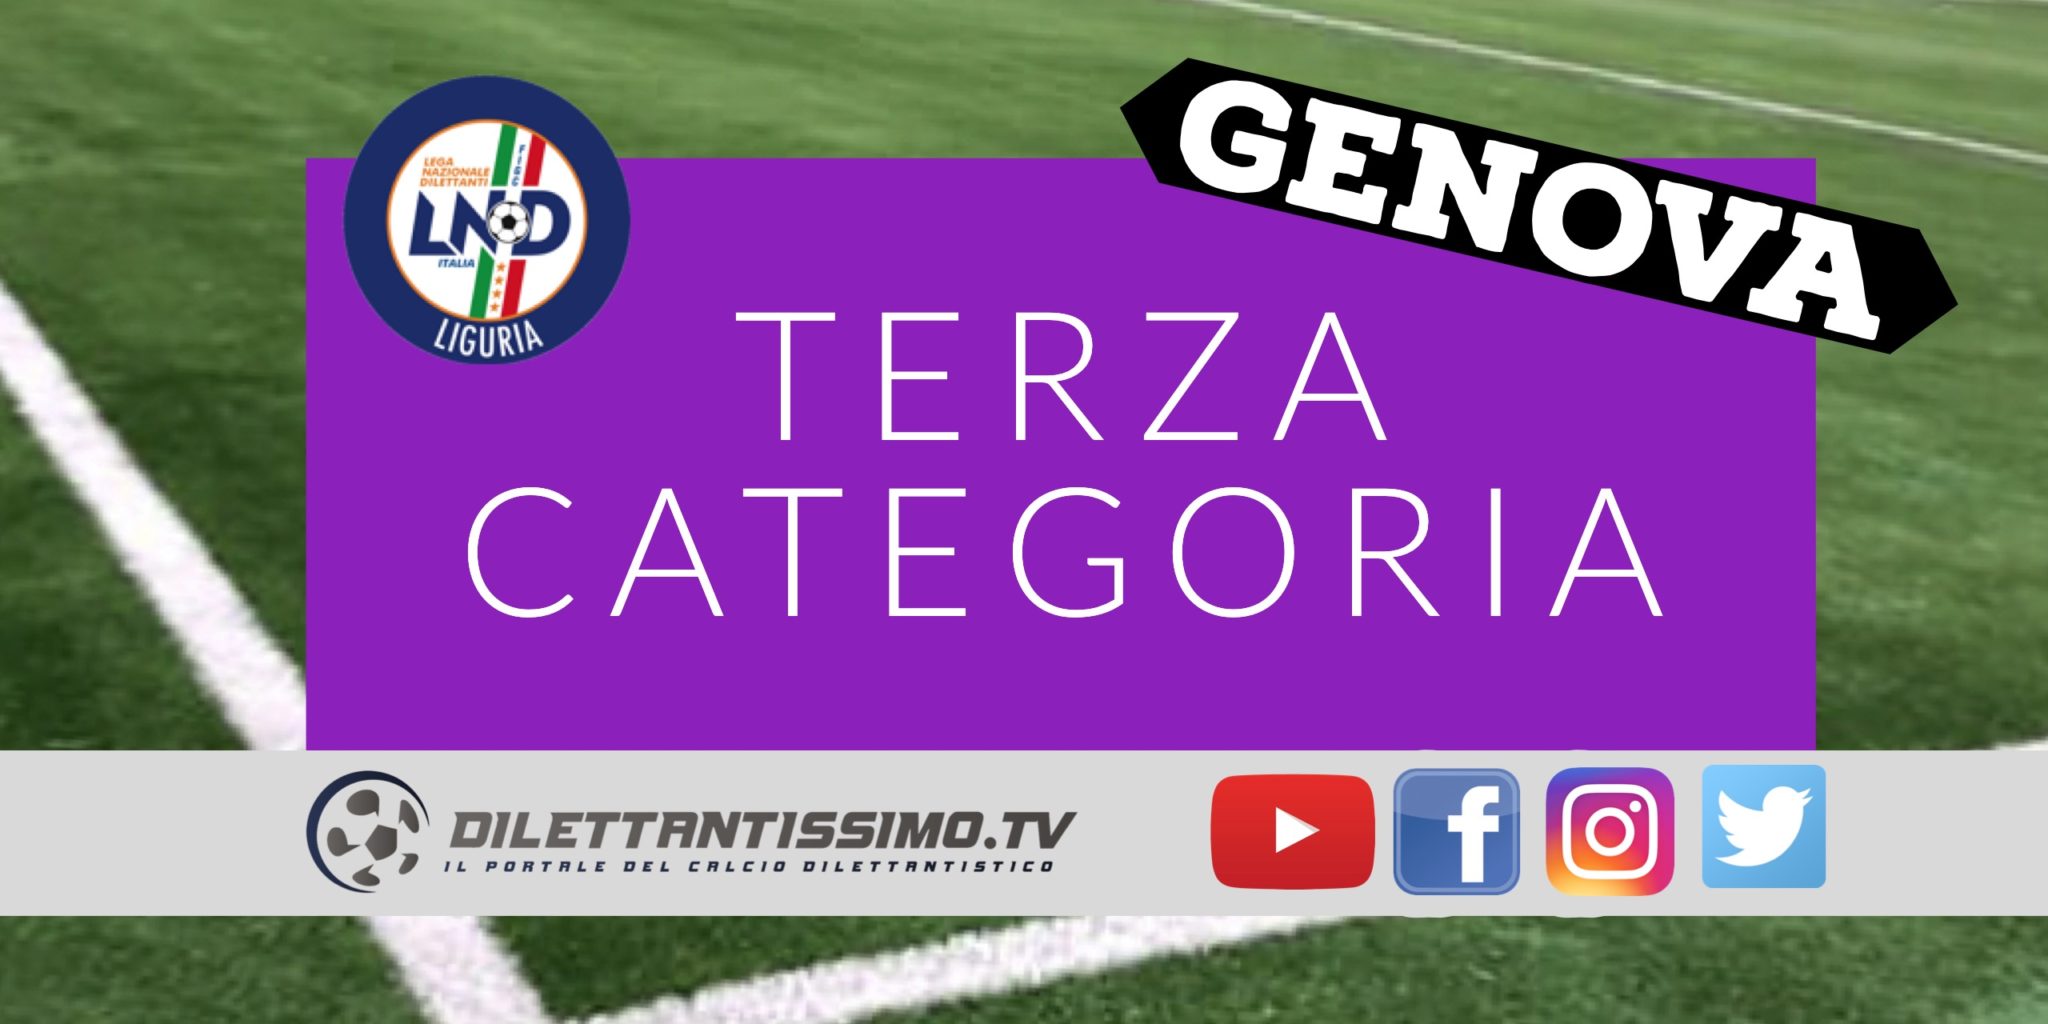 DIRETTA LIVE – TERZA CATEGORIA, 15ª GIORNATA